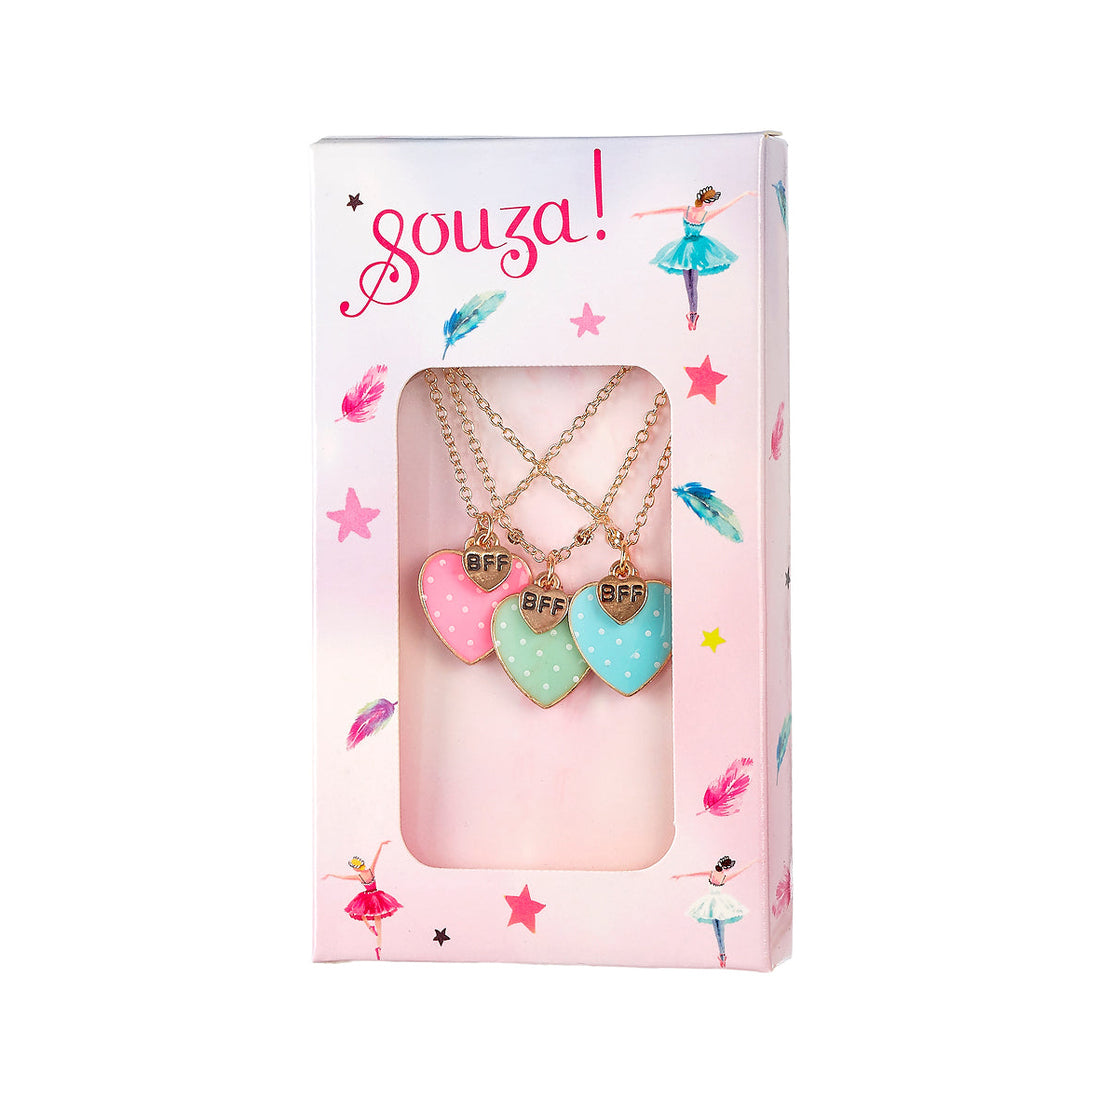 souza-gift-box-bff-hearts-necklaces-gold-3-pcs-box-1-box-souz-106420-